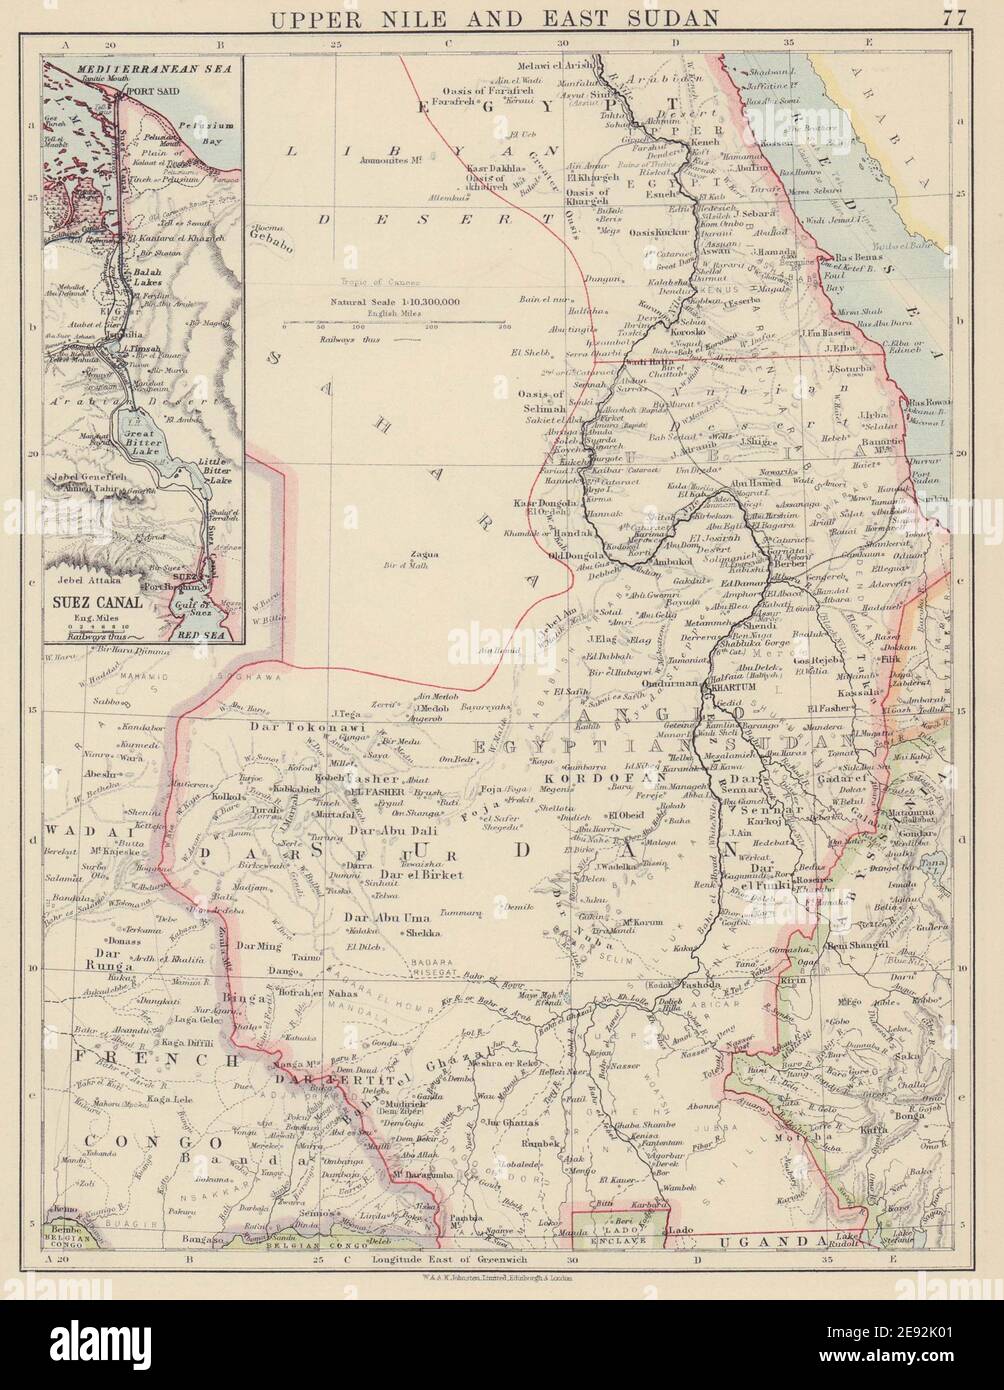 UPPER NILE, EAST SUDAN & SUEZ CANAL. Khartoum White/Blue Nile. JOHNSTON 1910 map Stock Photo